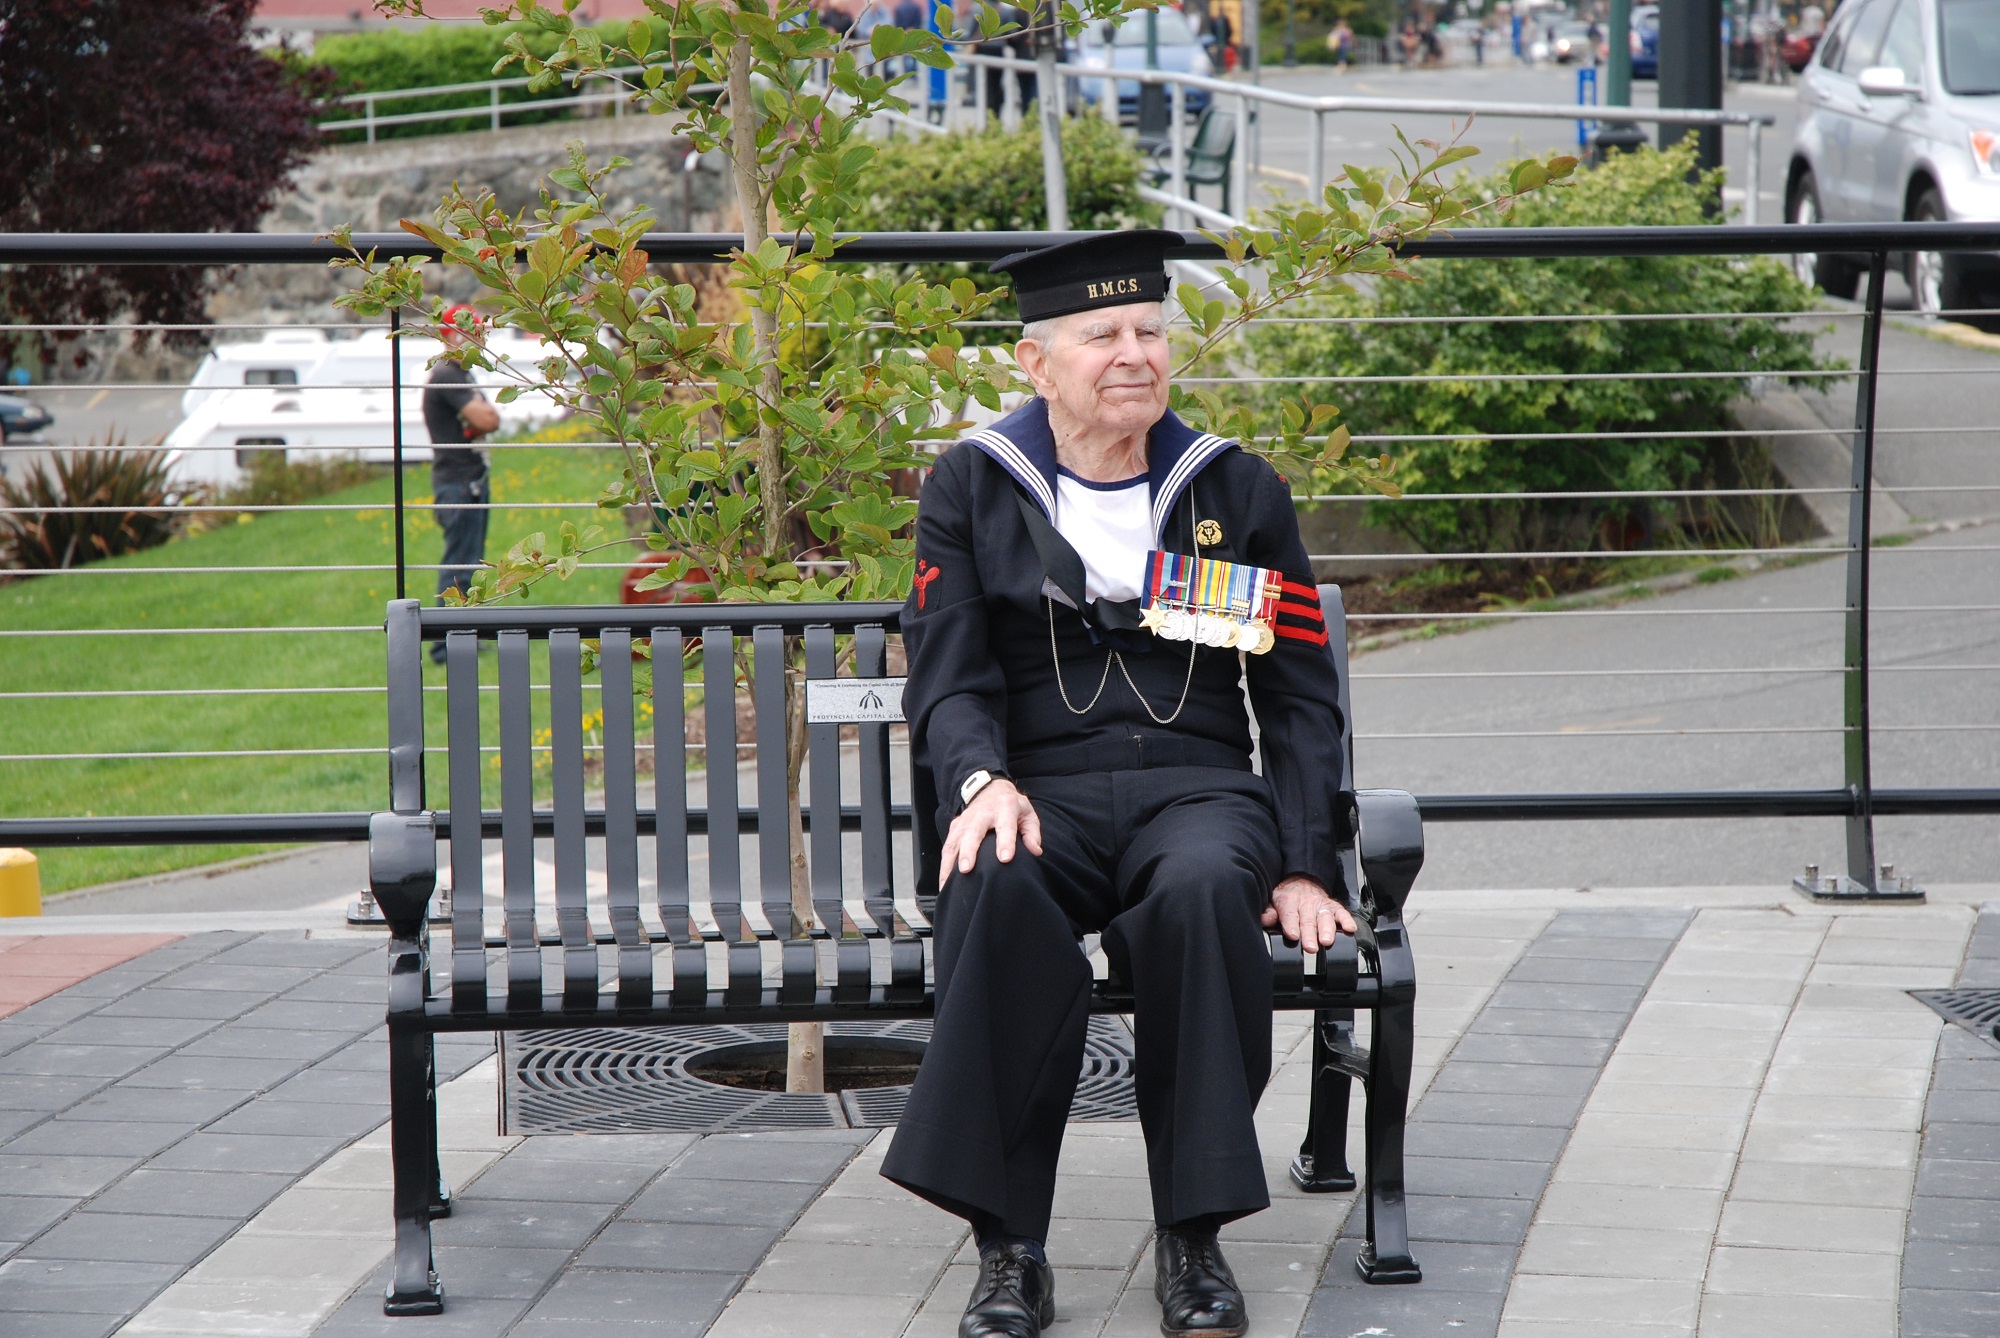 Captain John Mason on the bench where Veteran Sailor would be installed.